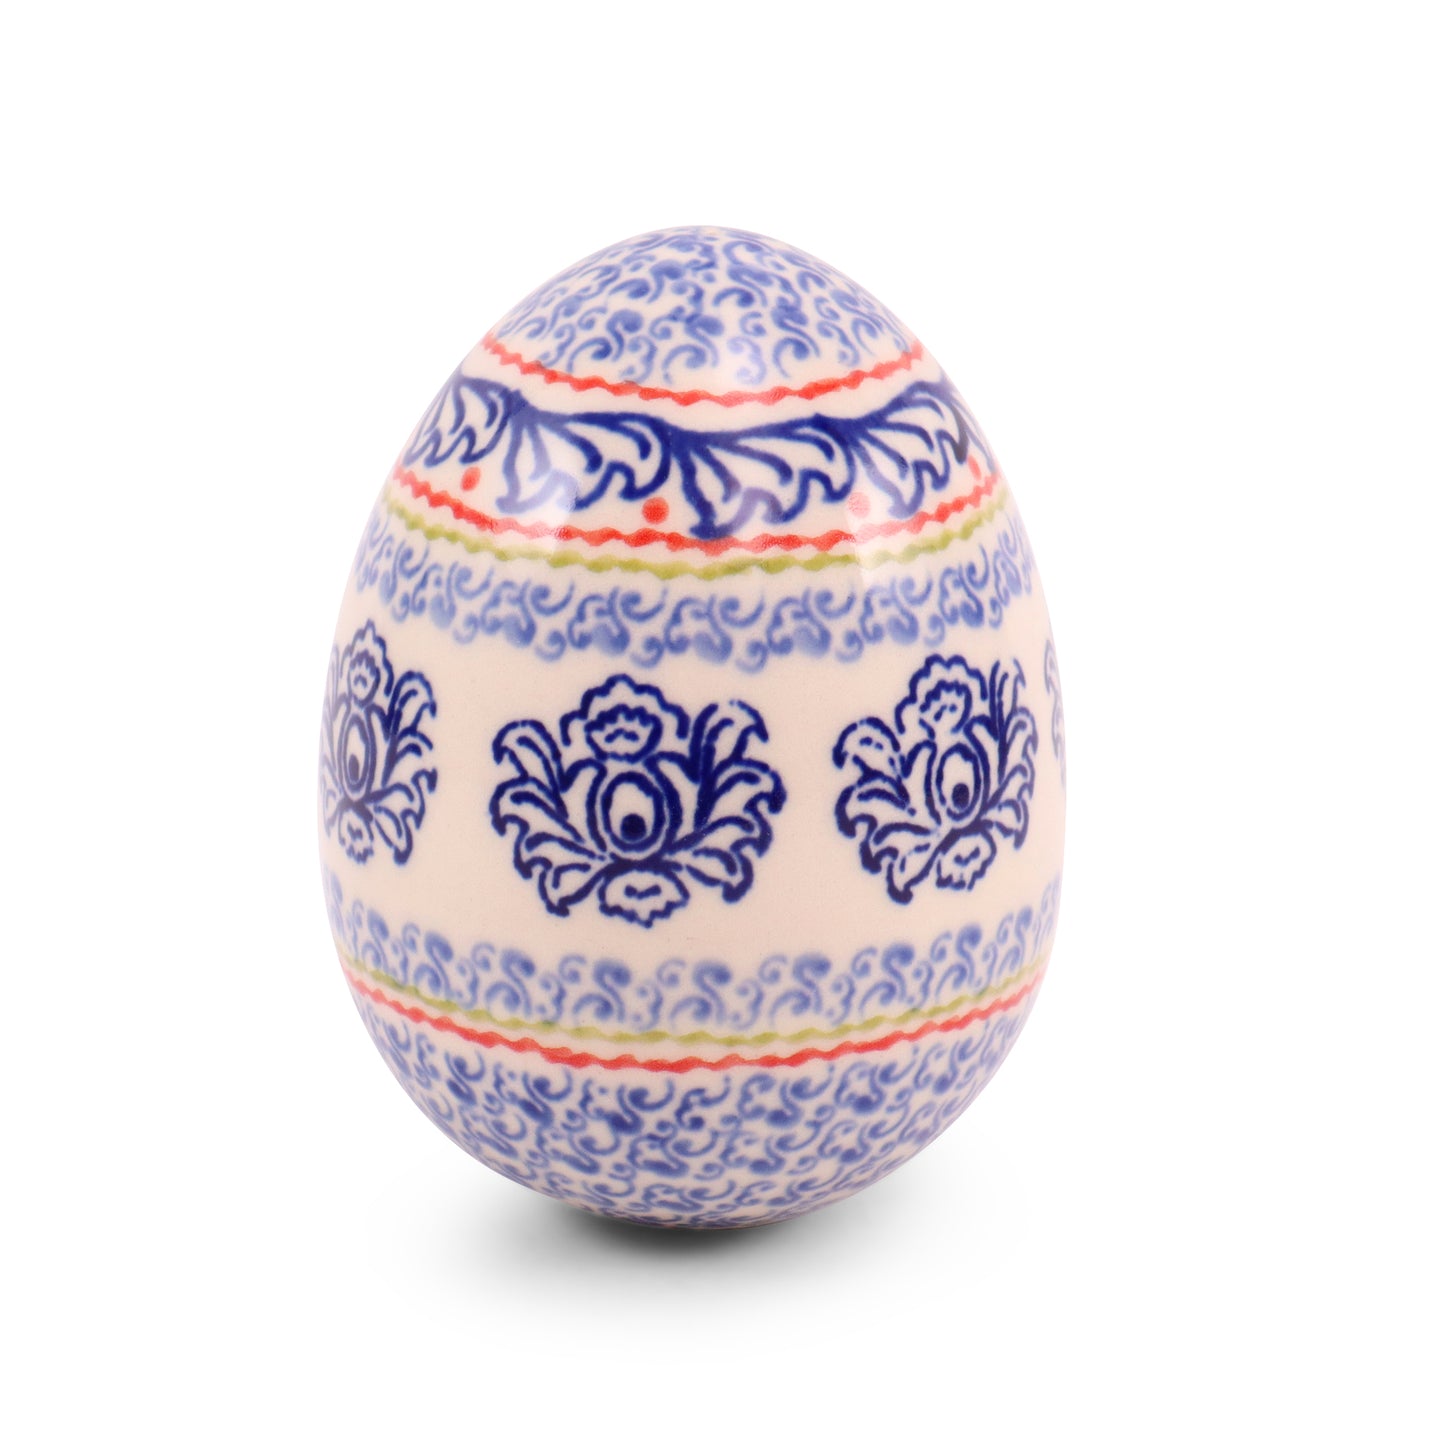 3"x4.5" Egg Figurine. Pattern: Blue Lace